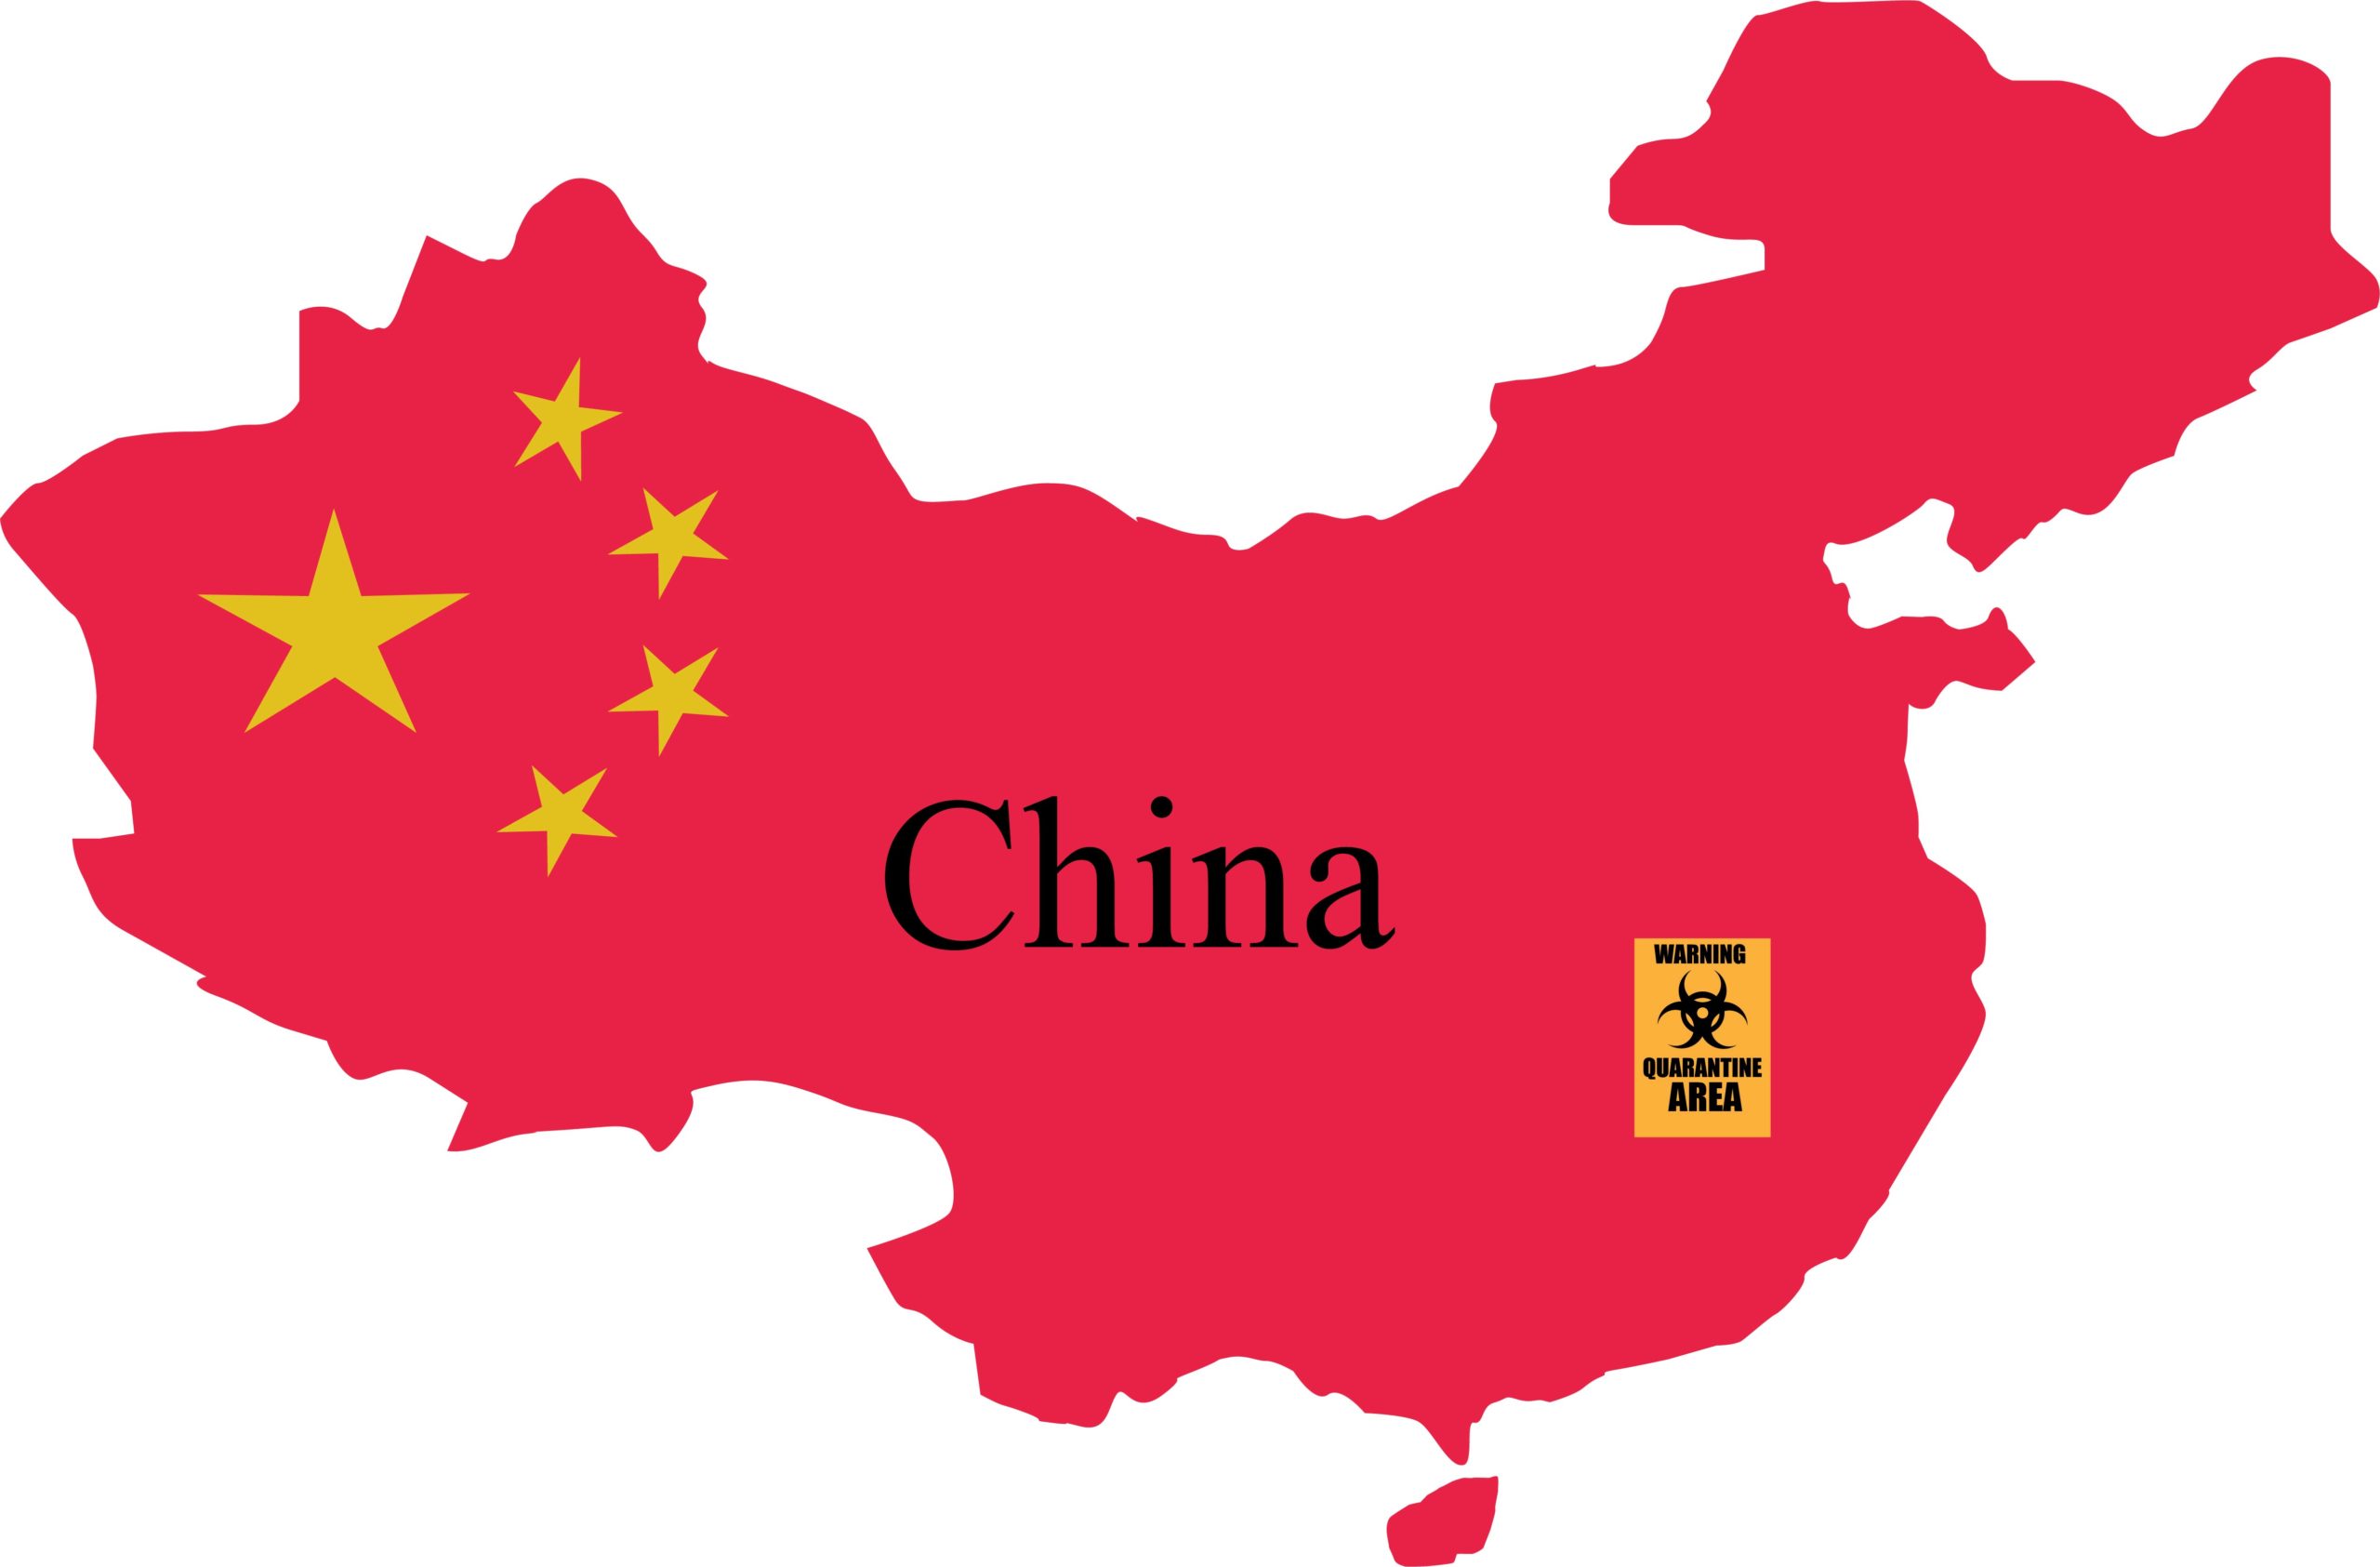 China to Lift Its Quarantine Requirements